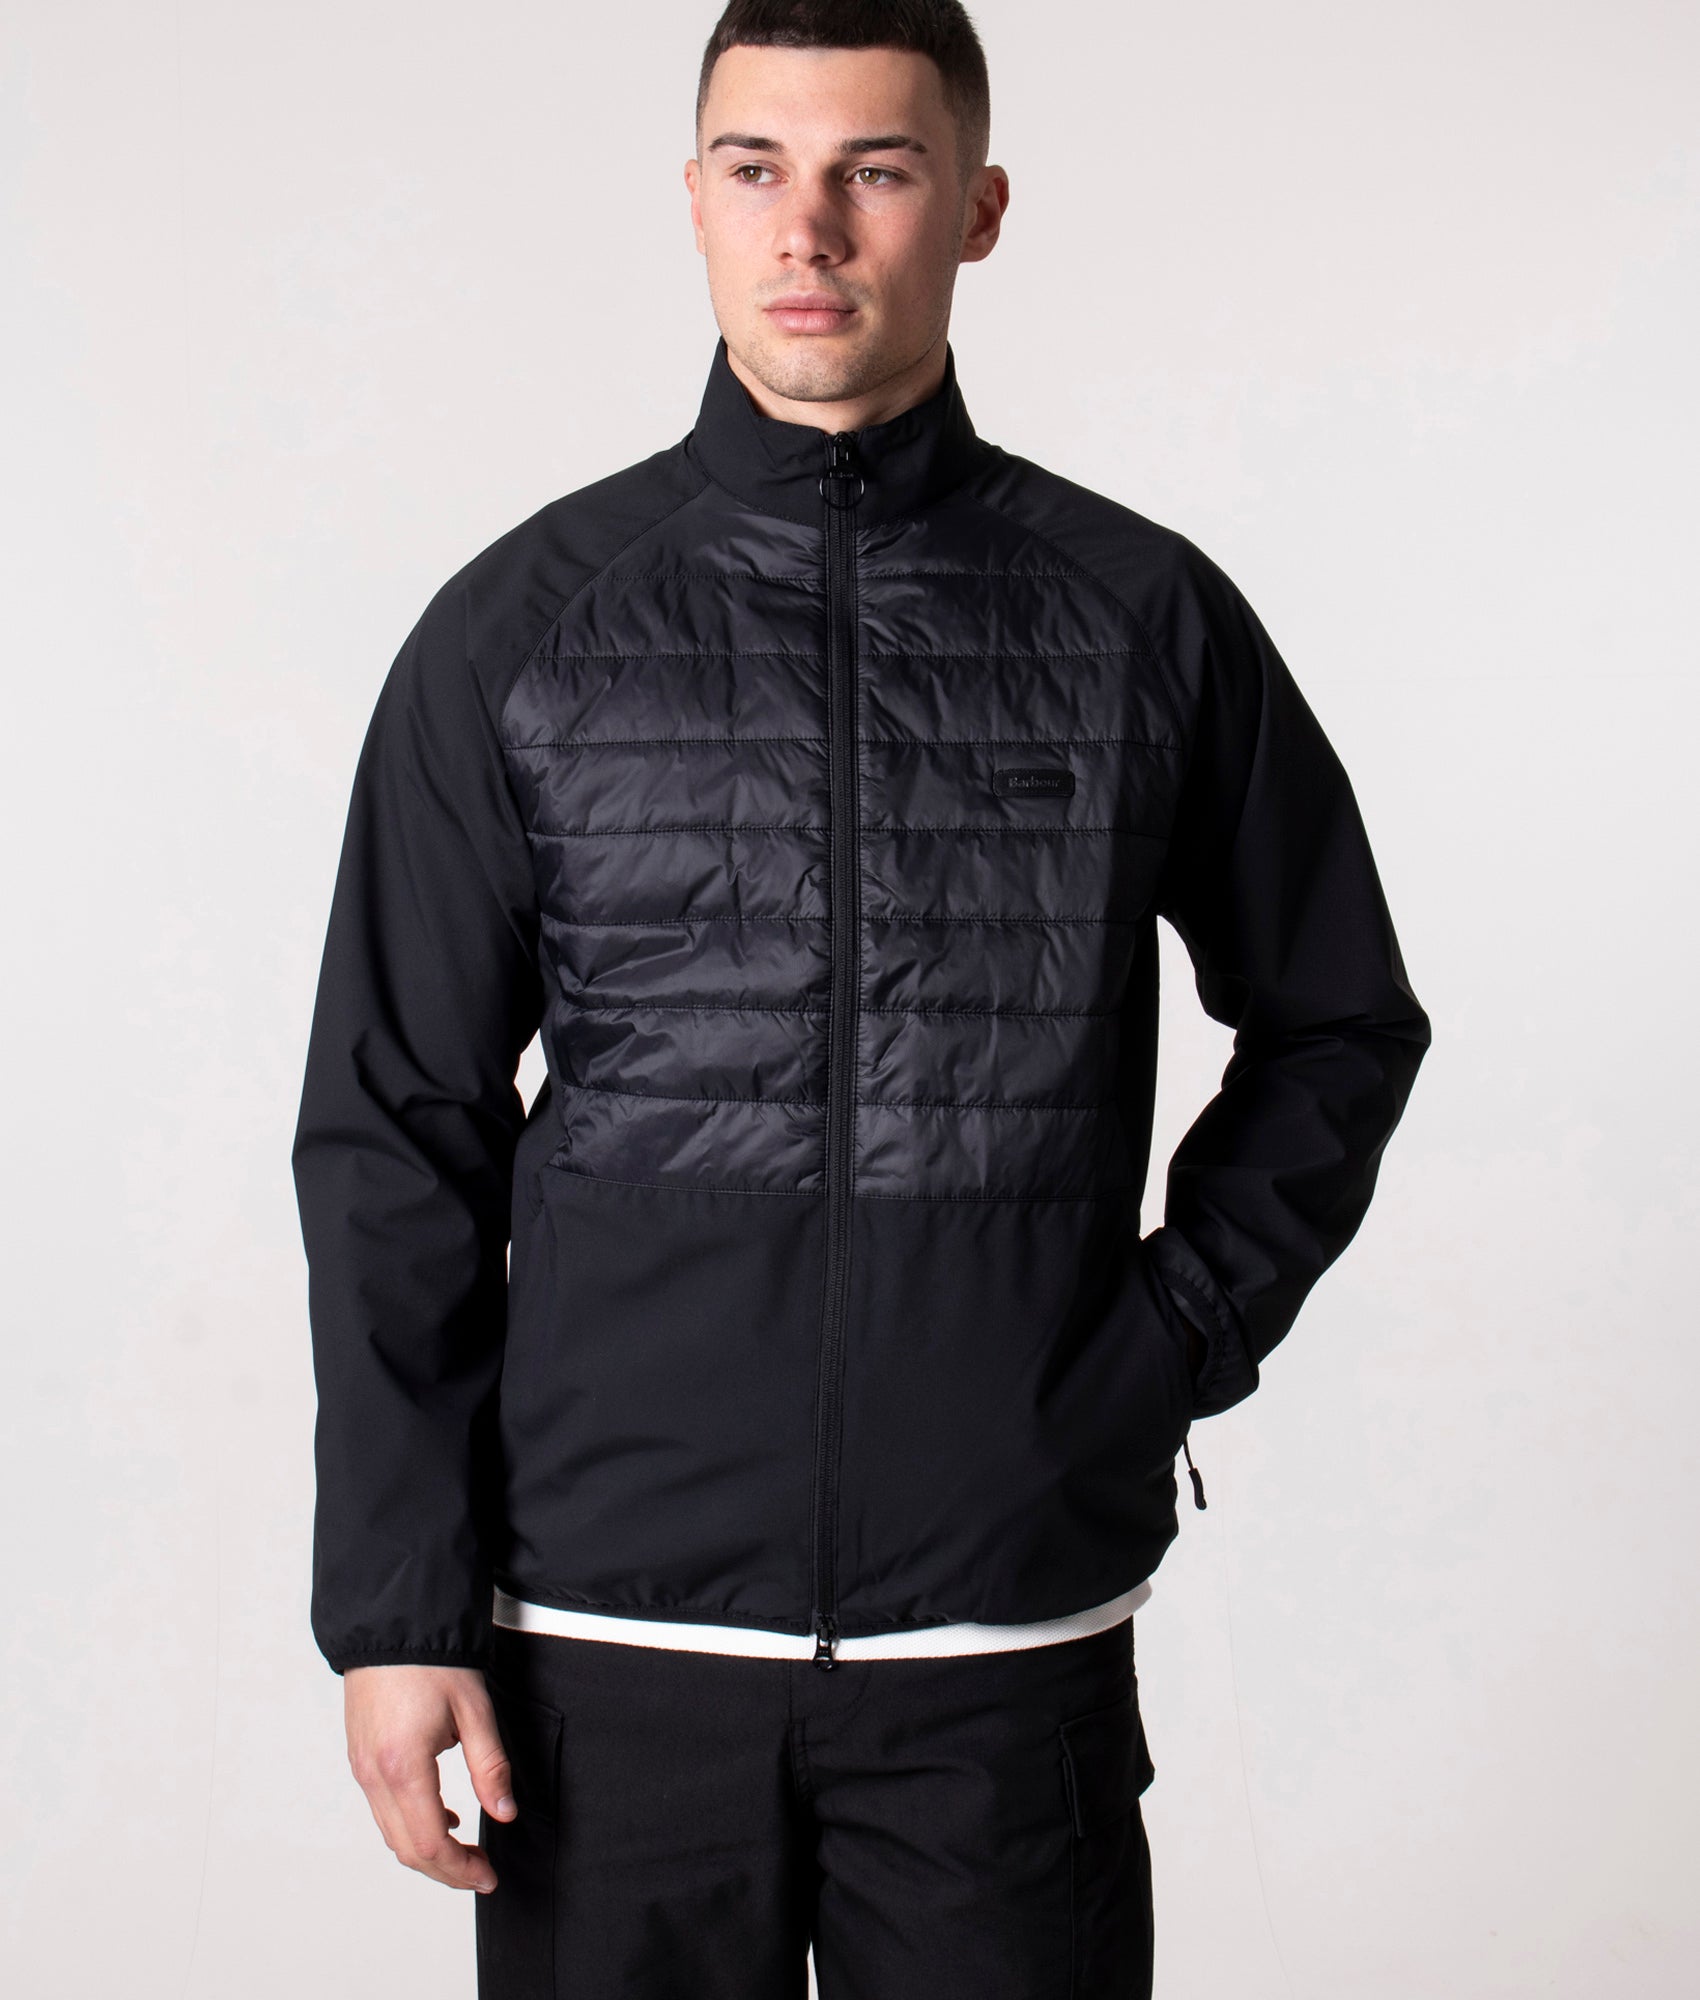 Barbour Lifestyle Mens Walking Casual Hybrid Jacket - Colour: BK11 Black - Size: Large